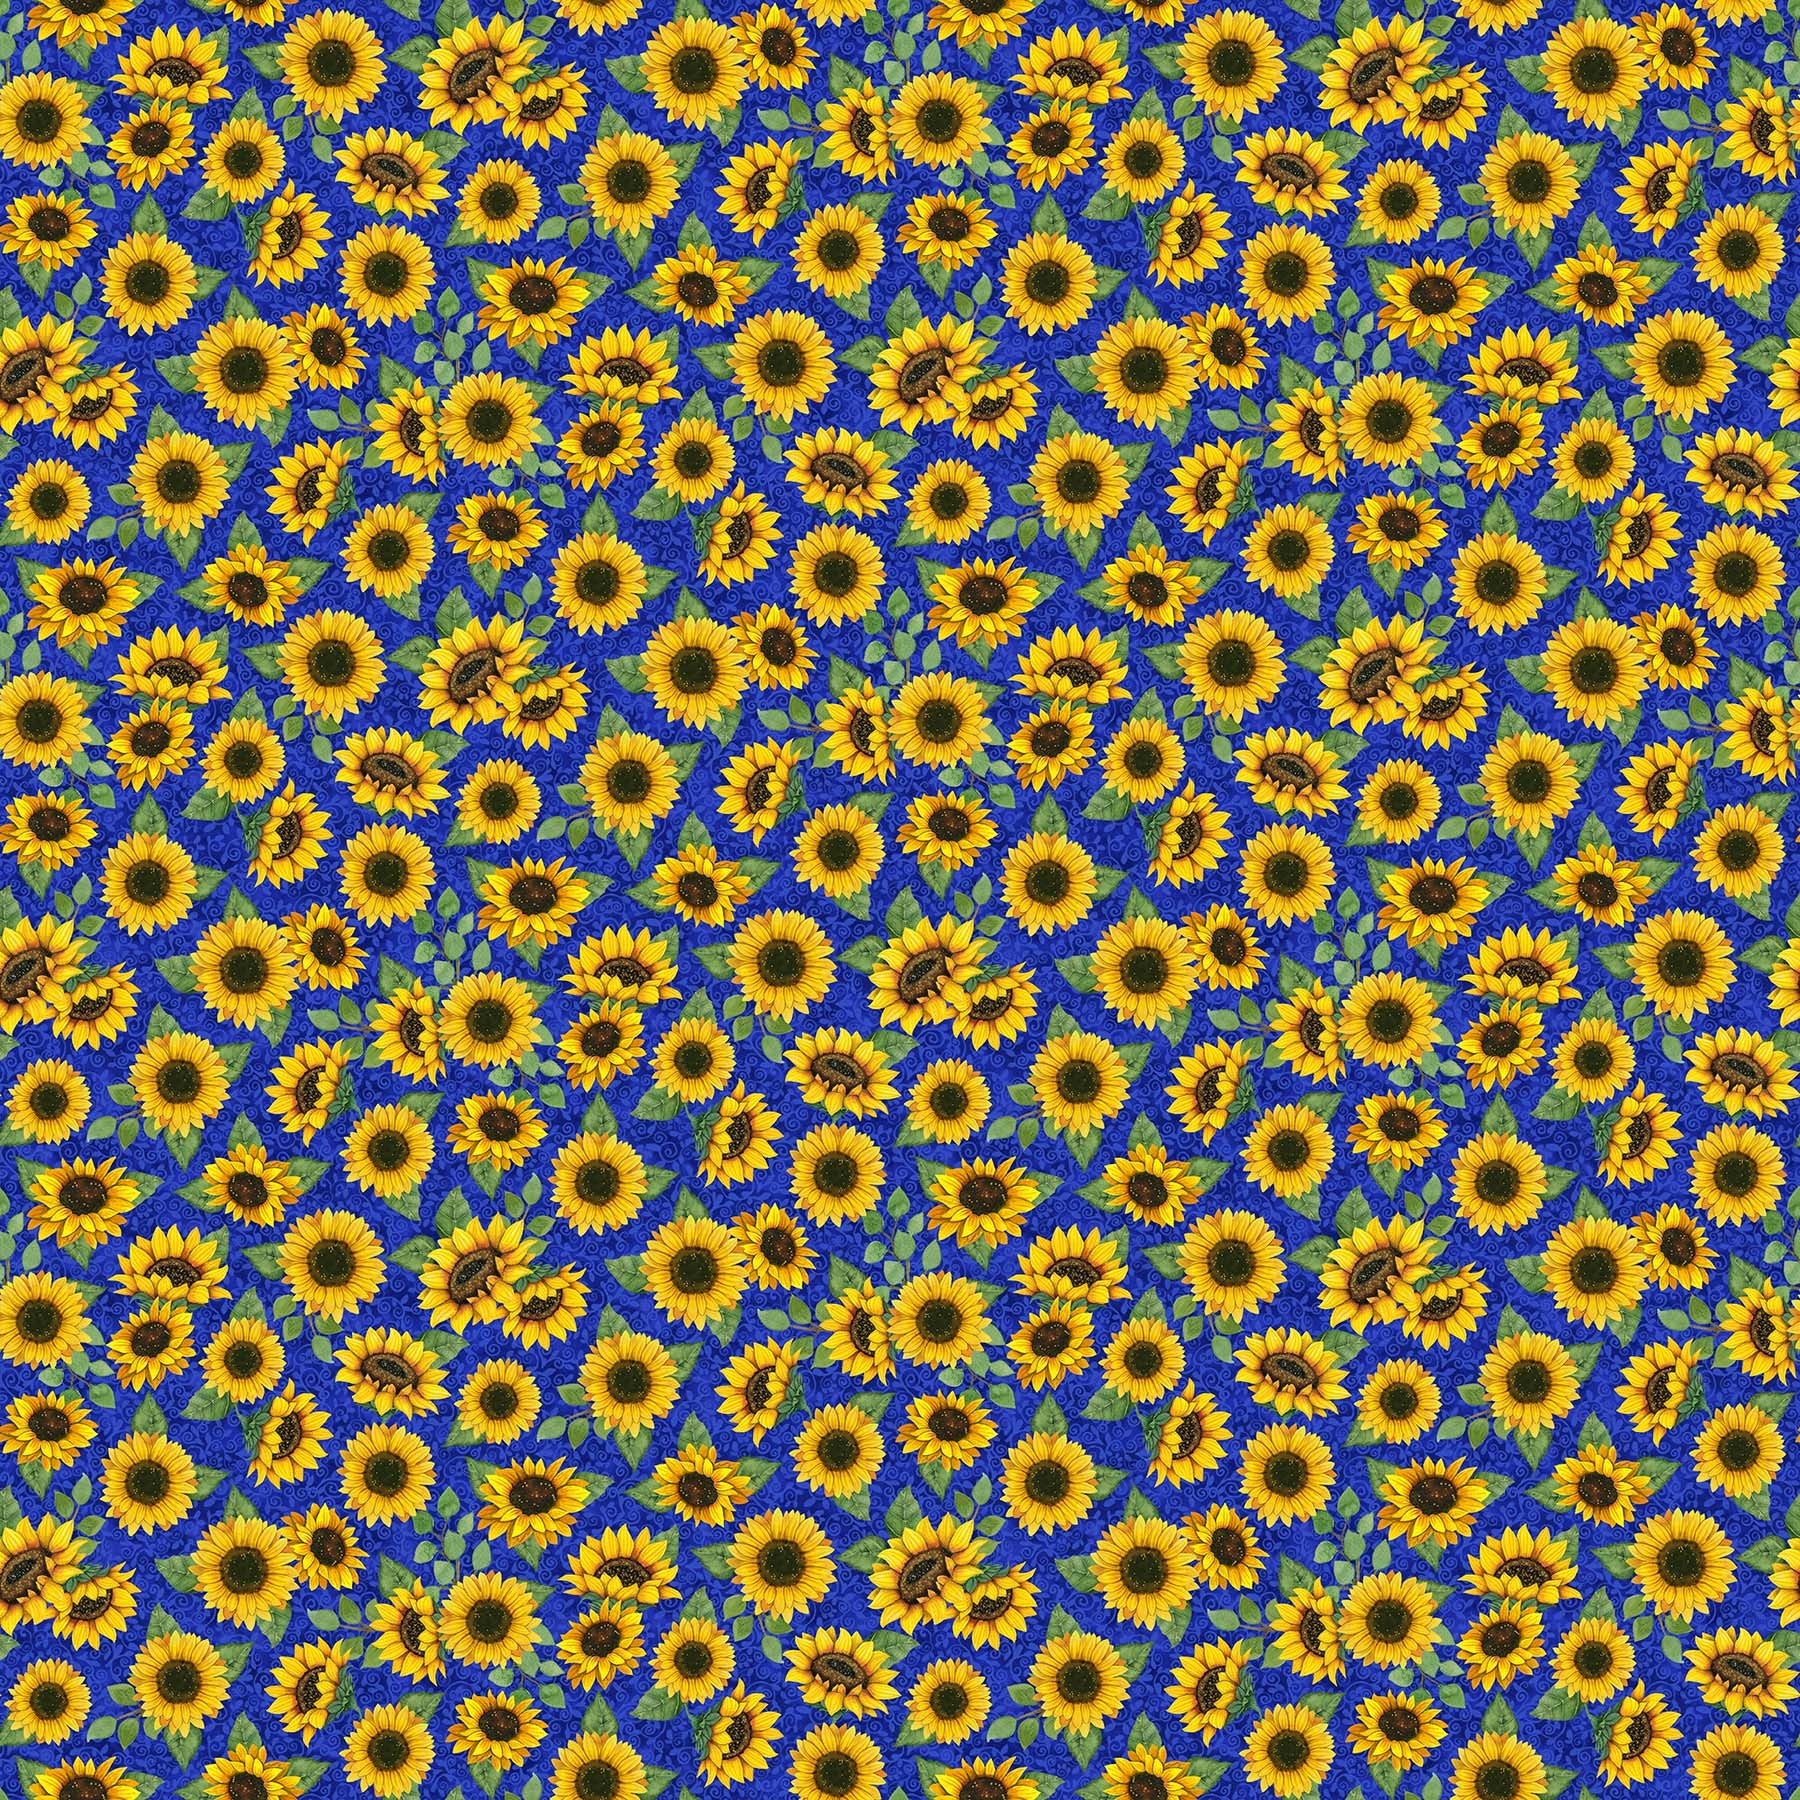 Autumn Gathering Blue Multi Sunflowers Digital Print Fabric-Northcott Fabrics-My Favorite Quilt Store